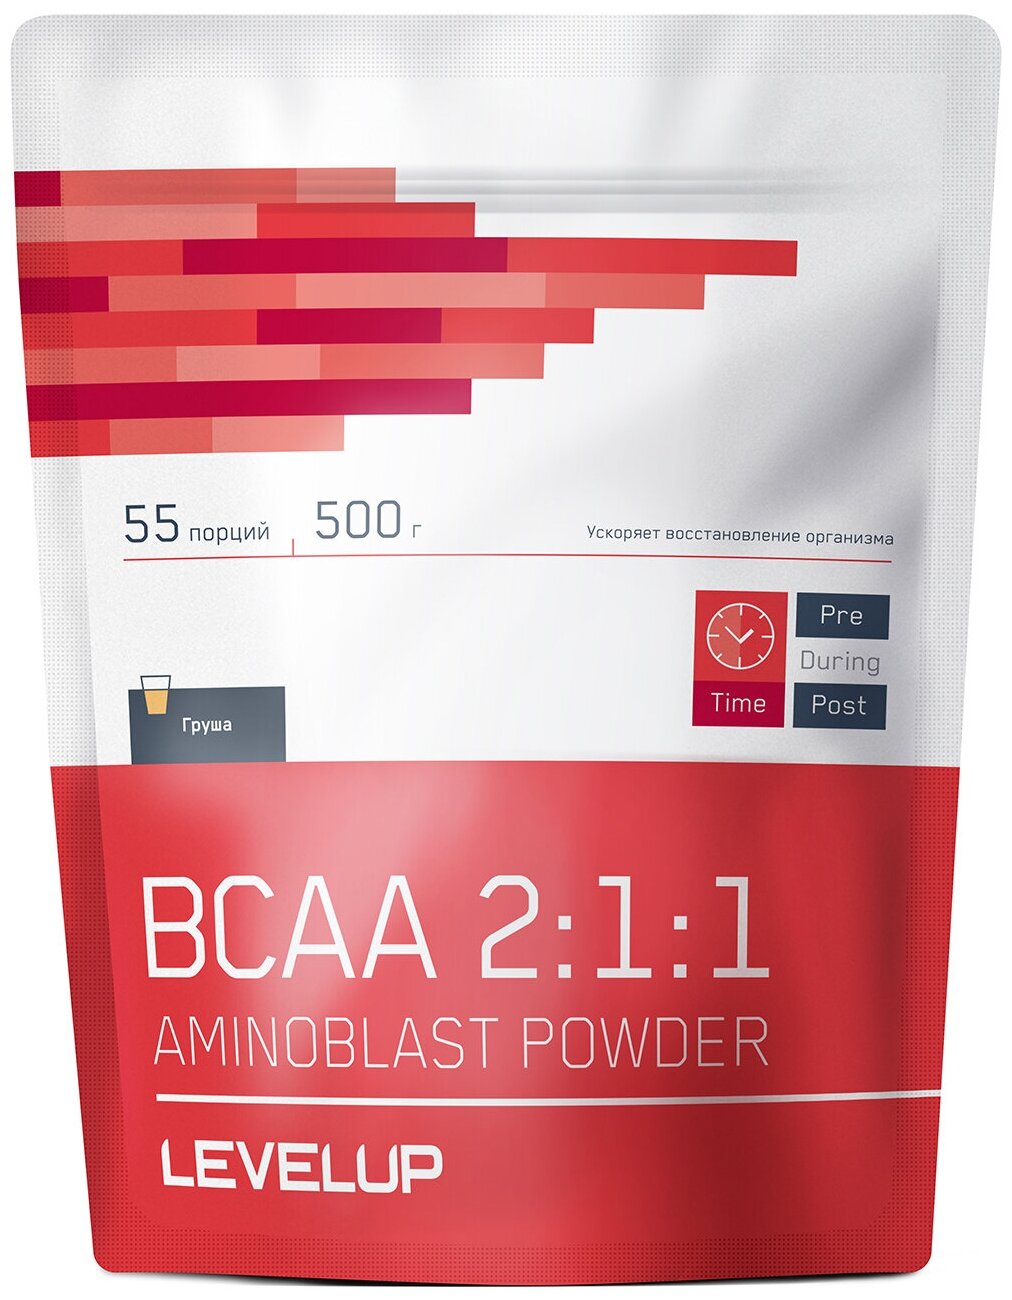 LevelUp Aminoblast BCAA Powder, 500 g ()